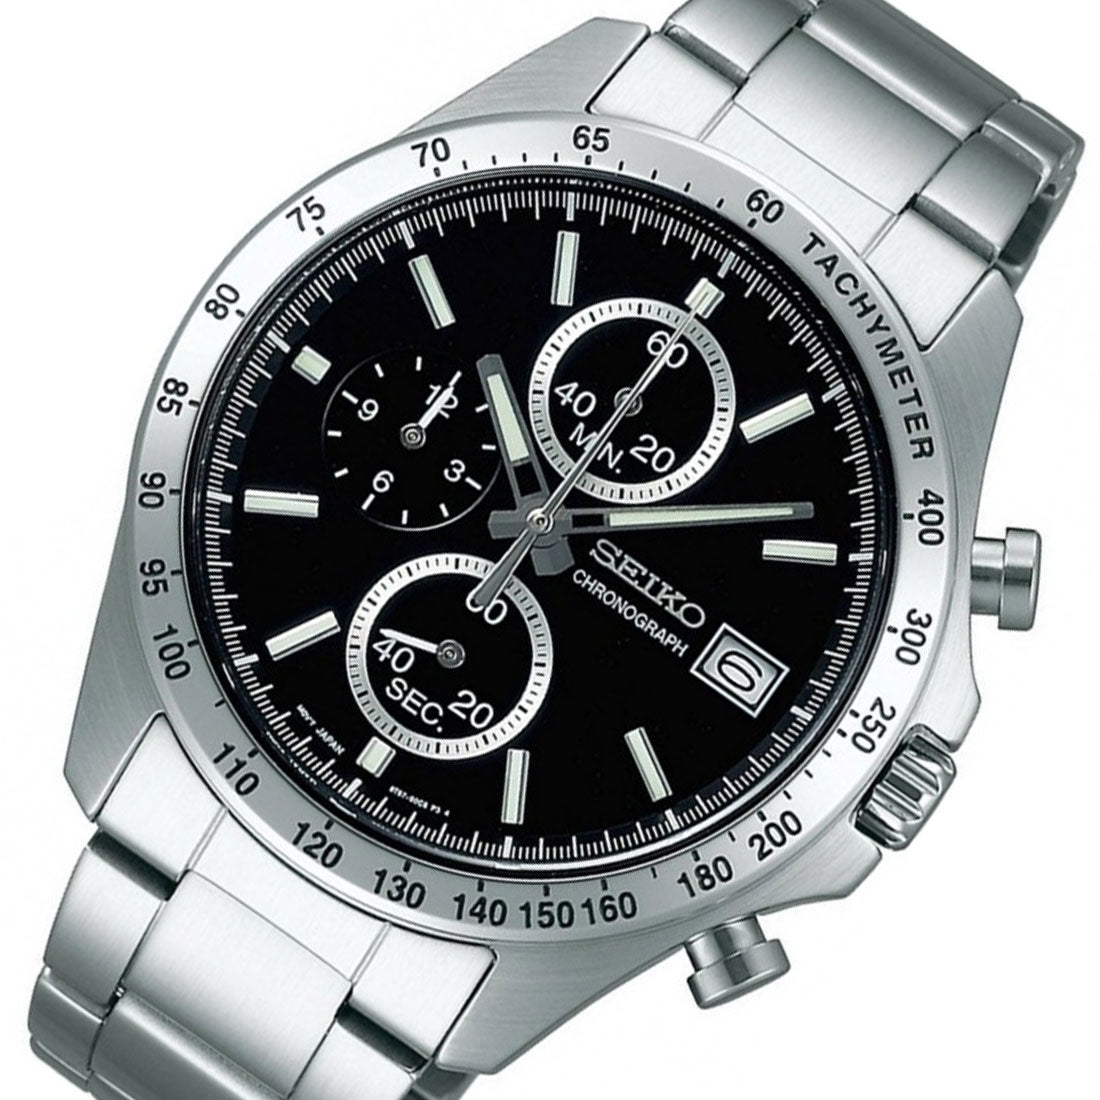 Seiko SBTR005 JDM Spirit Selection Chronograph Black Dial Quartz Watch